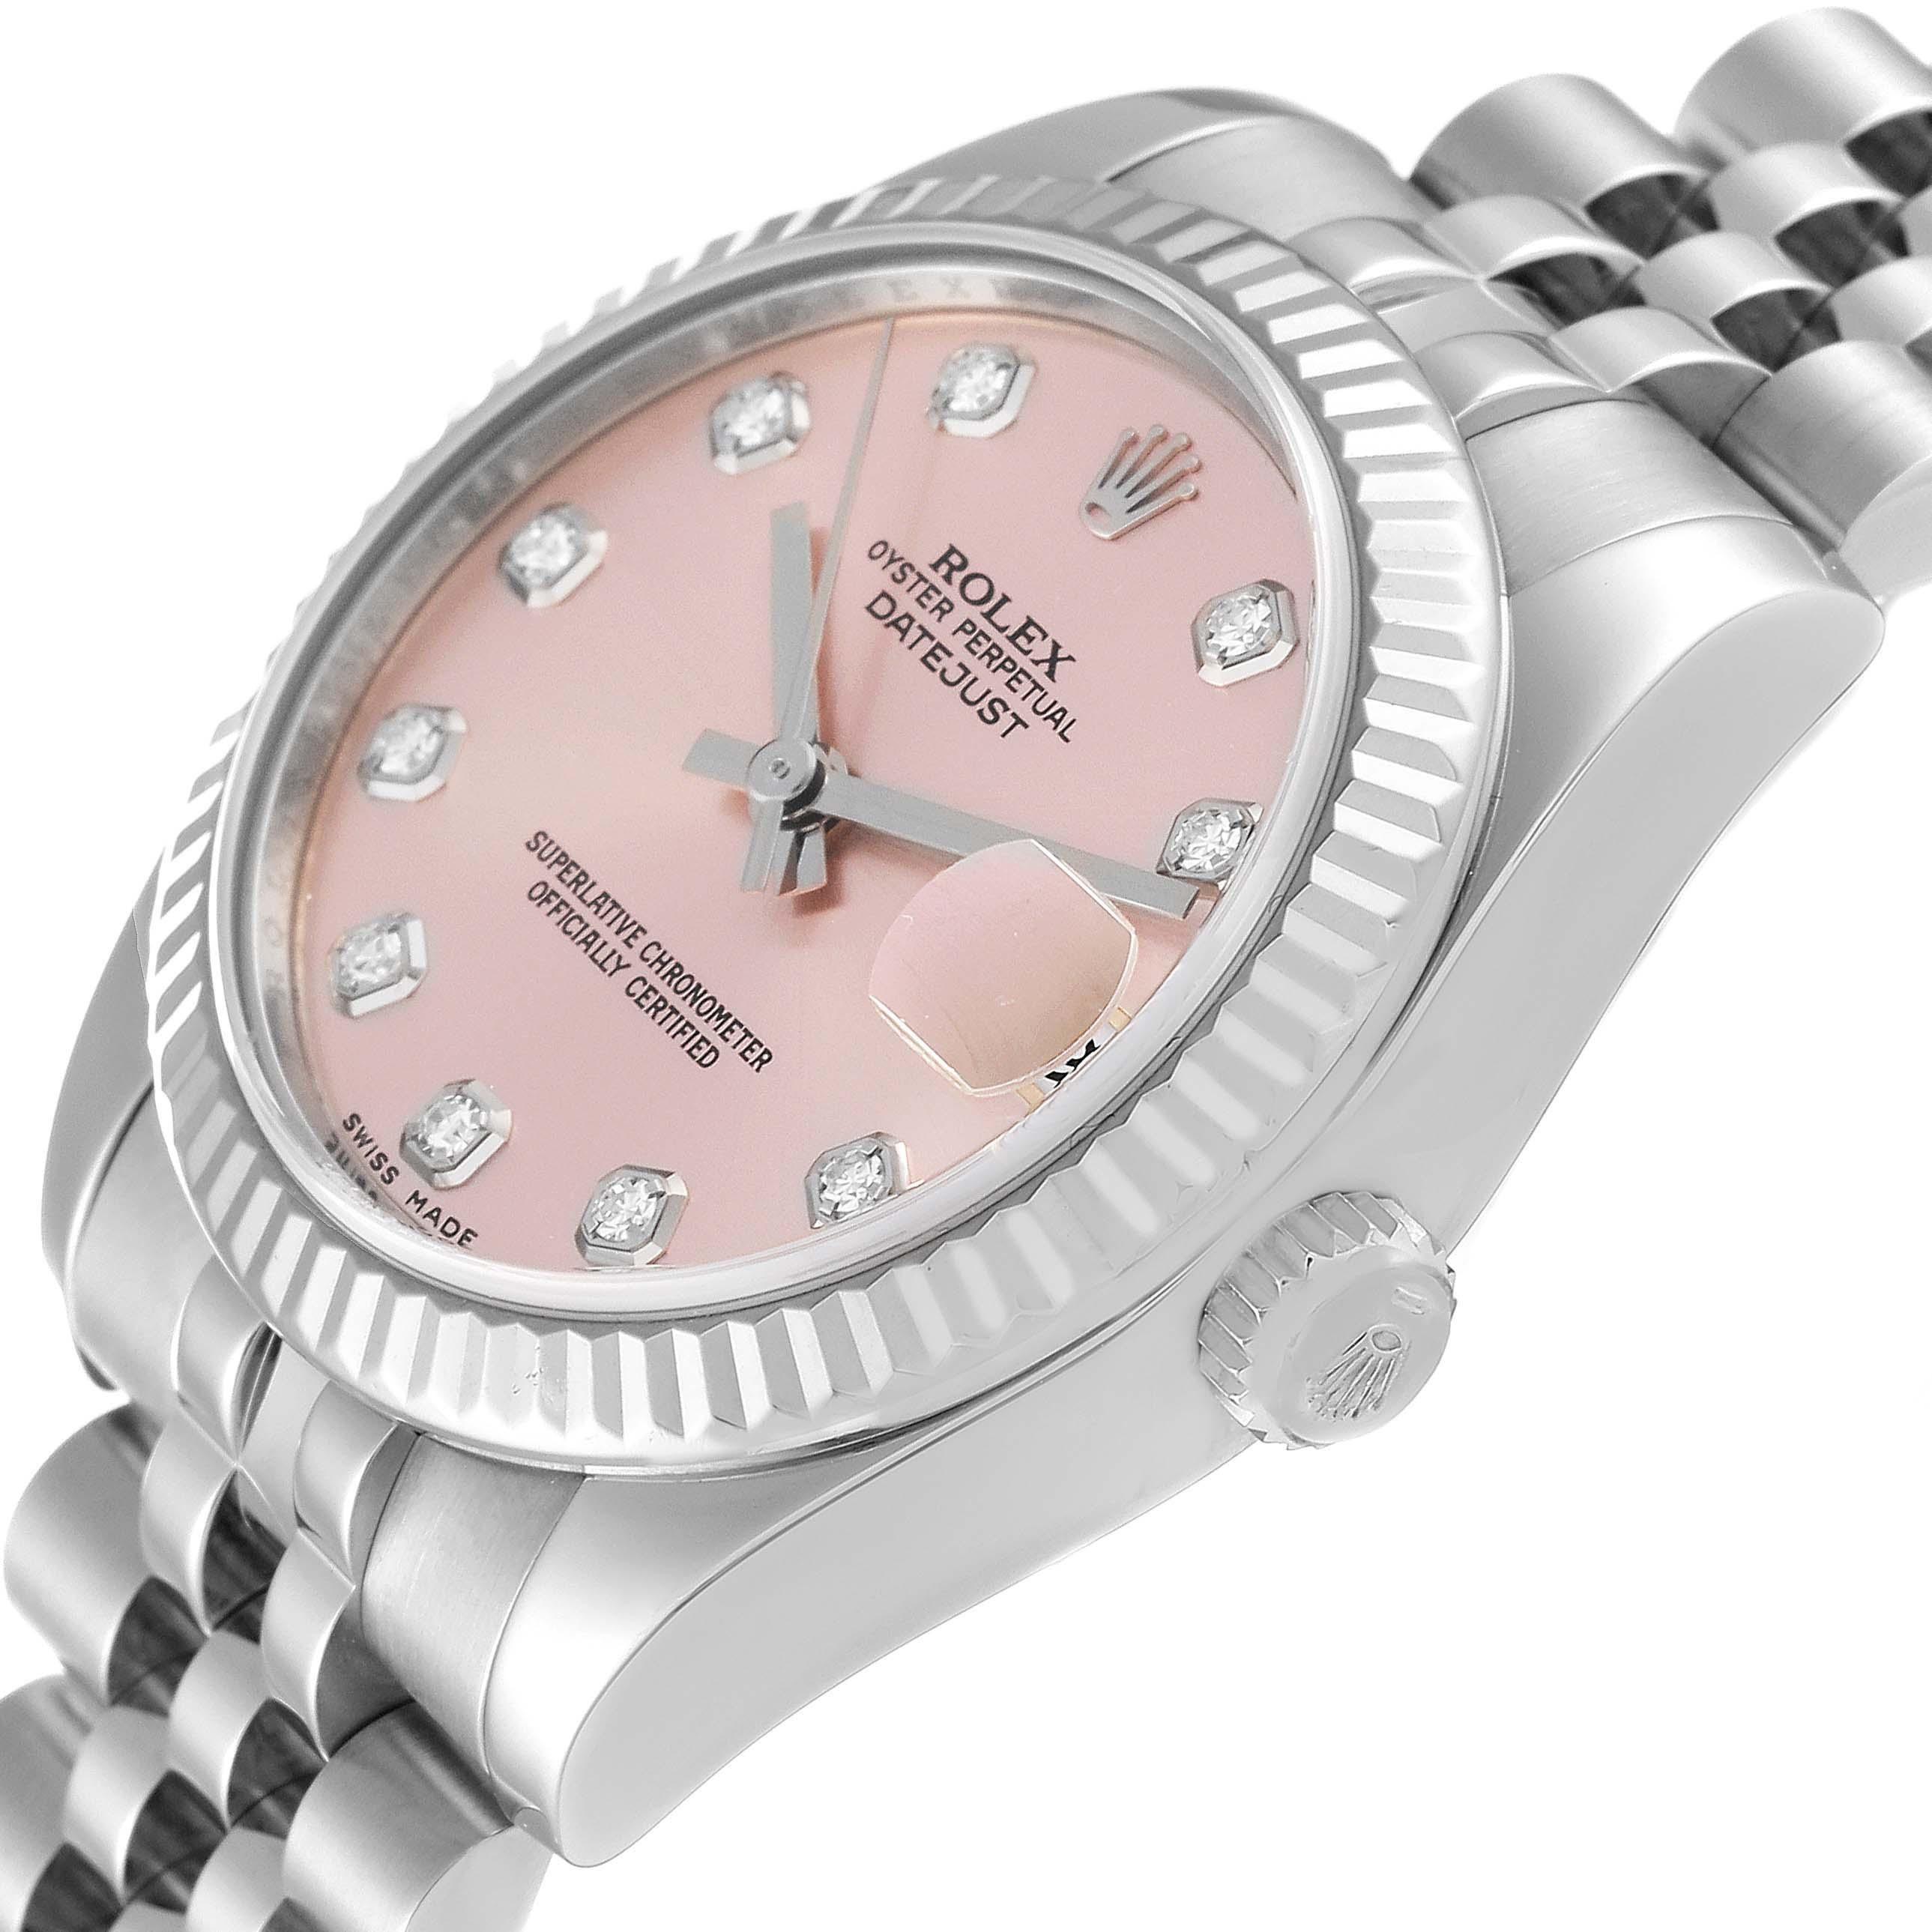 Rolex Datejust Midsize Steel White Gold Pink Diamond Dial Ladies Watch 178274 1